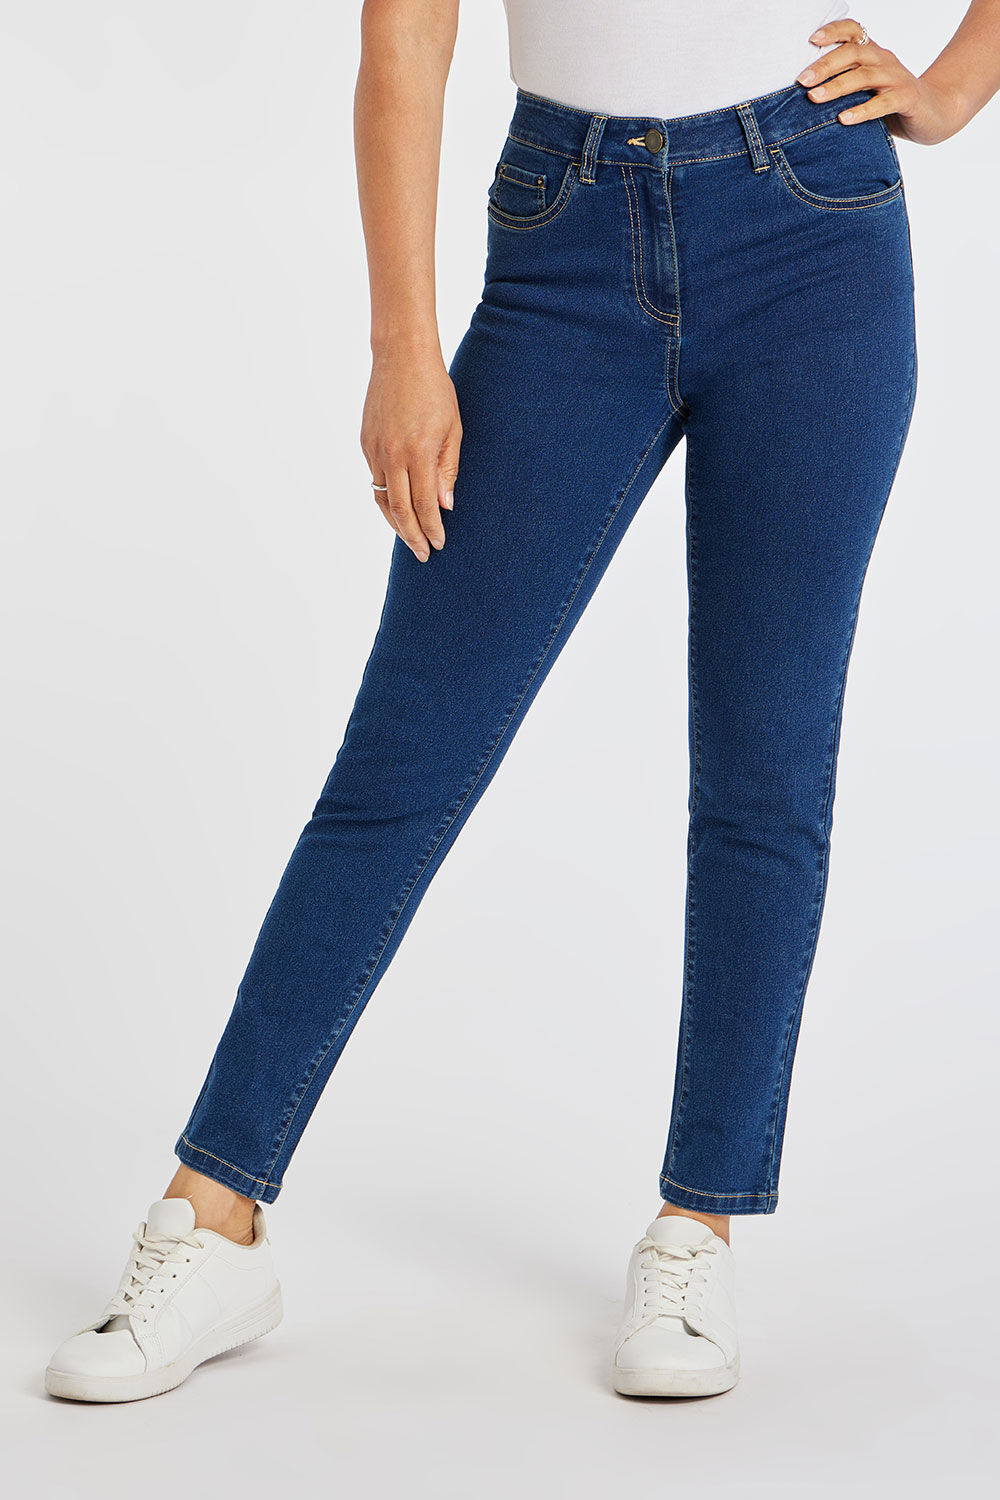 Bonmarche Denim The Susie Slim Leg Jeans, Size: 22